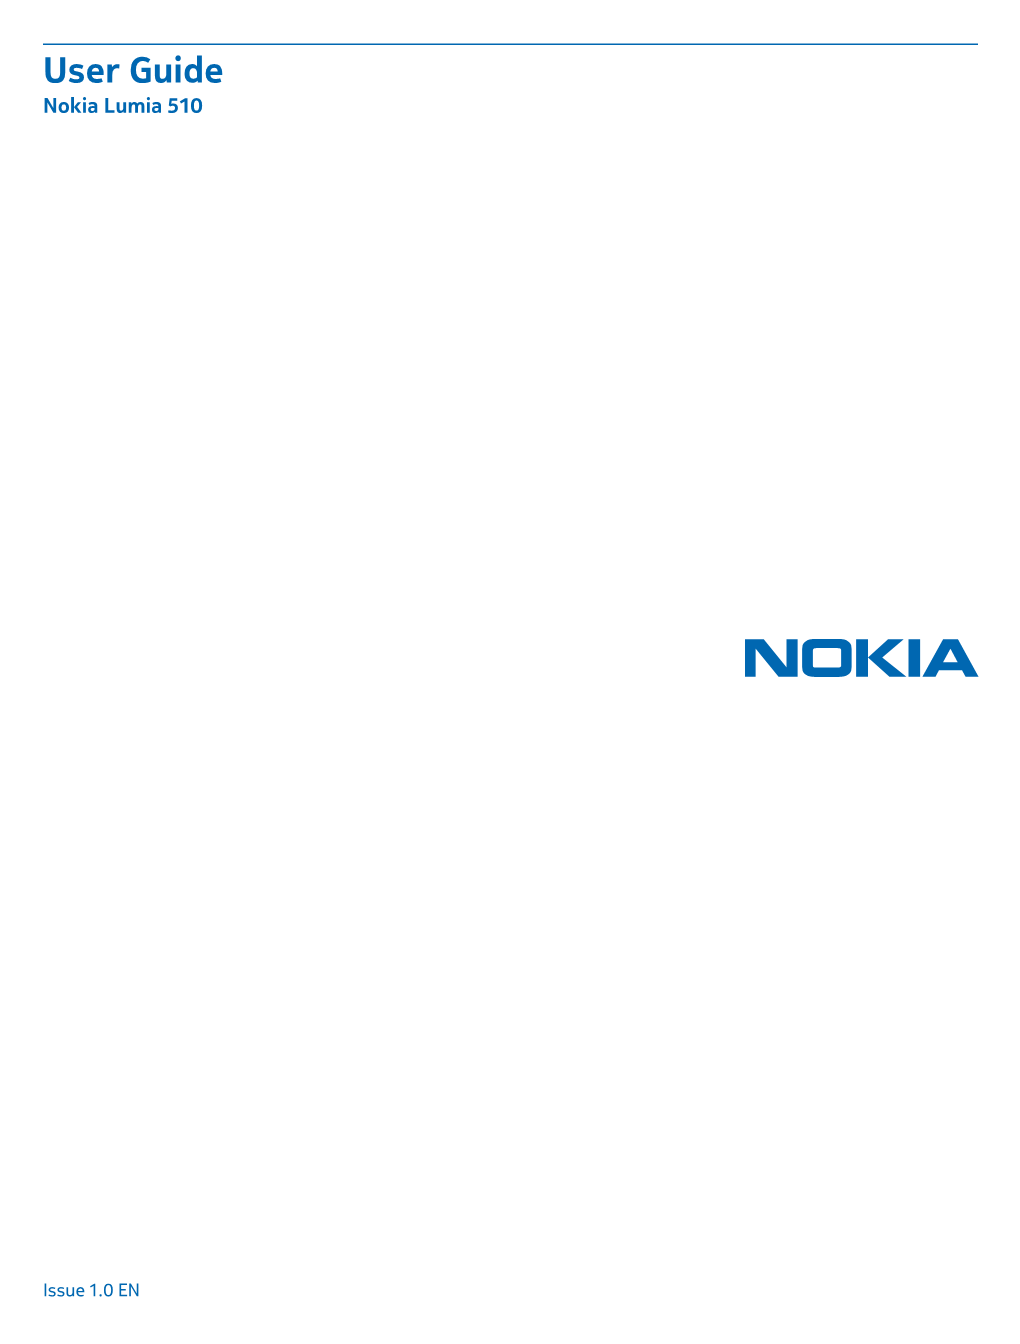 User Guide Nokia Lumia 510